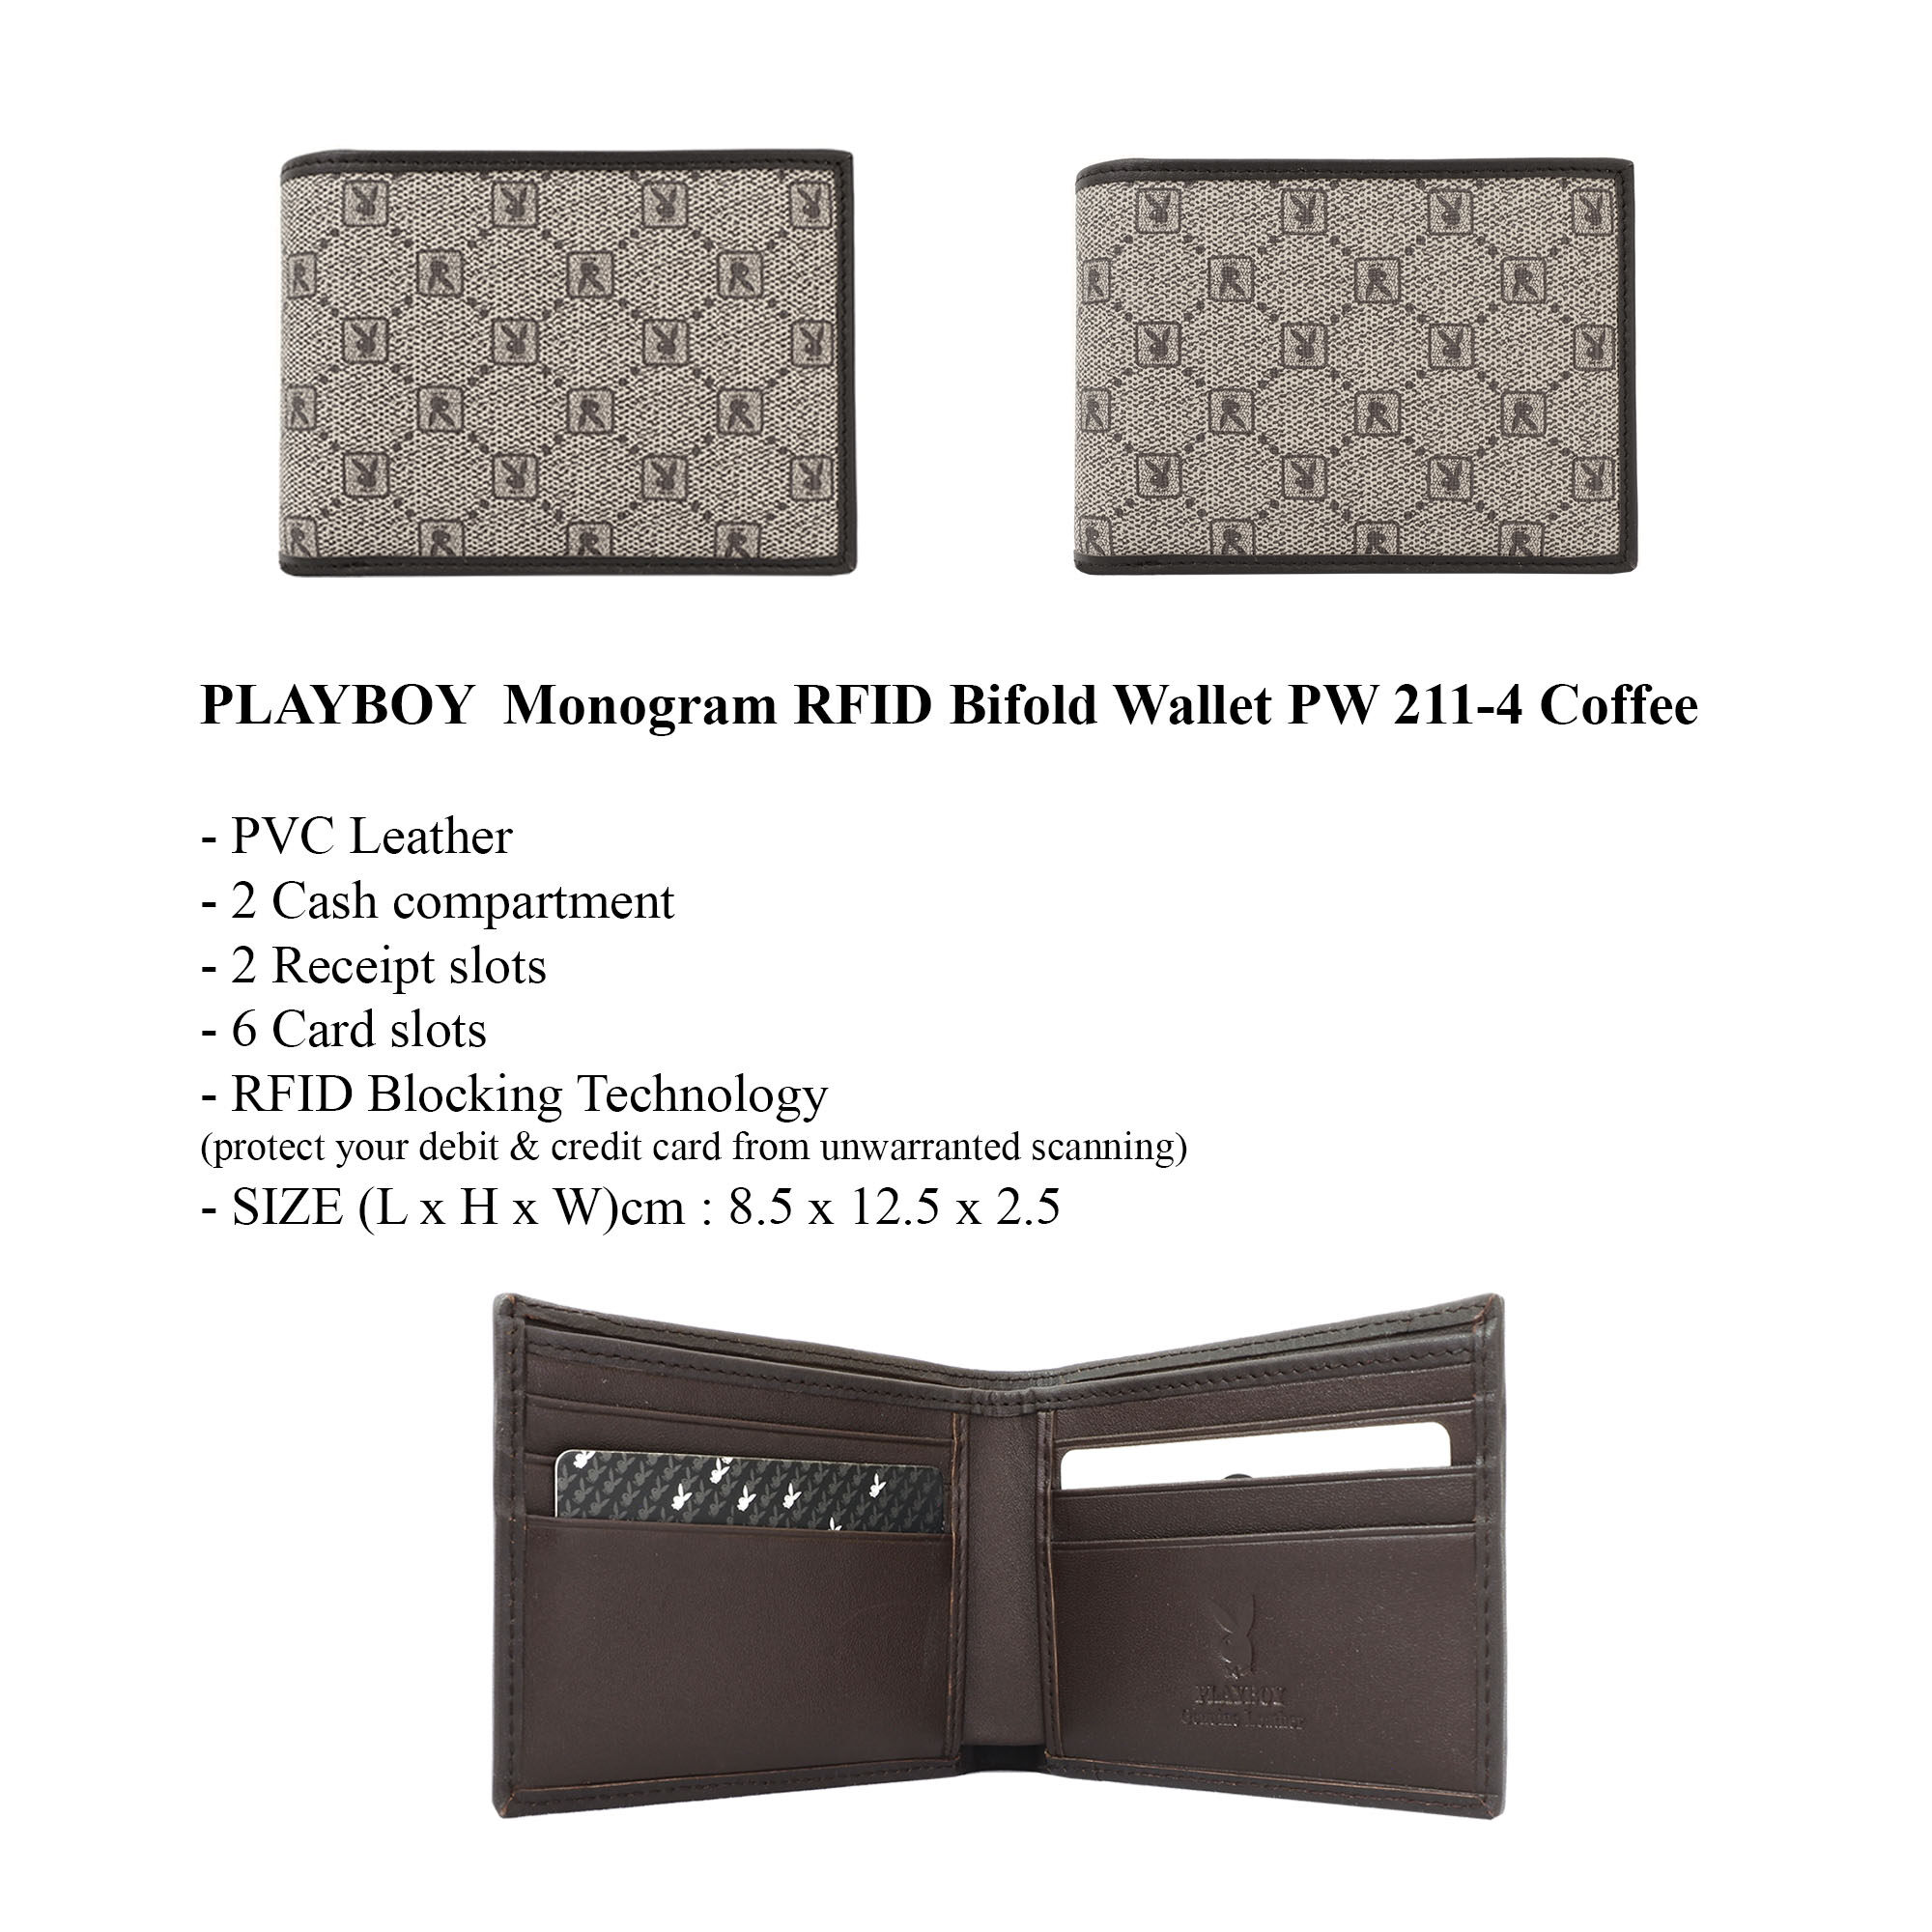 Playboy Monogram RFID Long Wallet / Bifold Wallet PW 211 Coffee